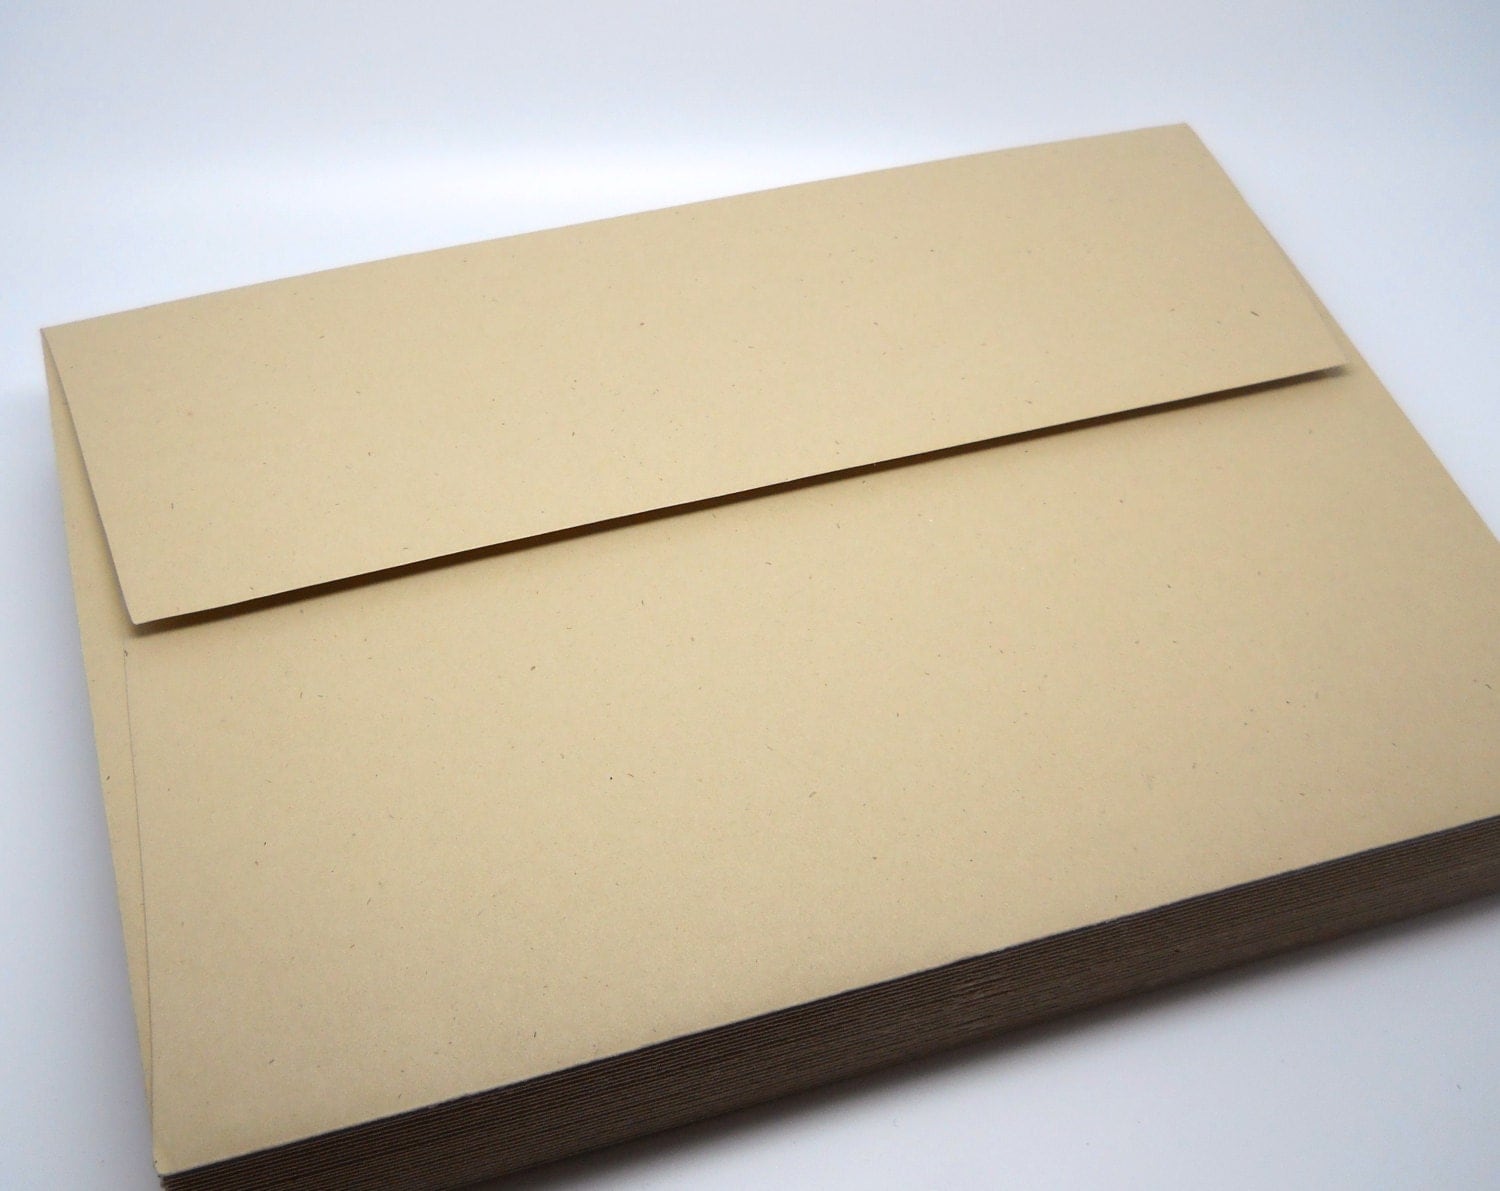 5x7 Envelopes Near Me